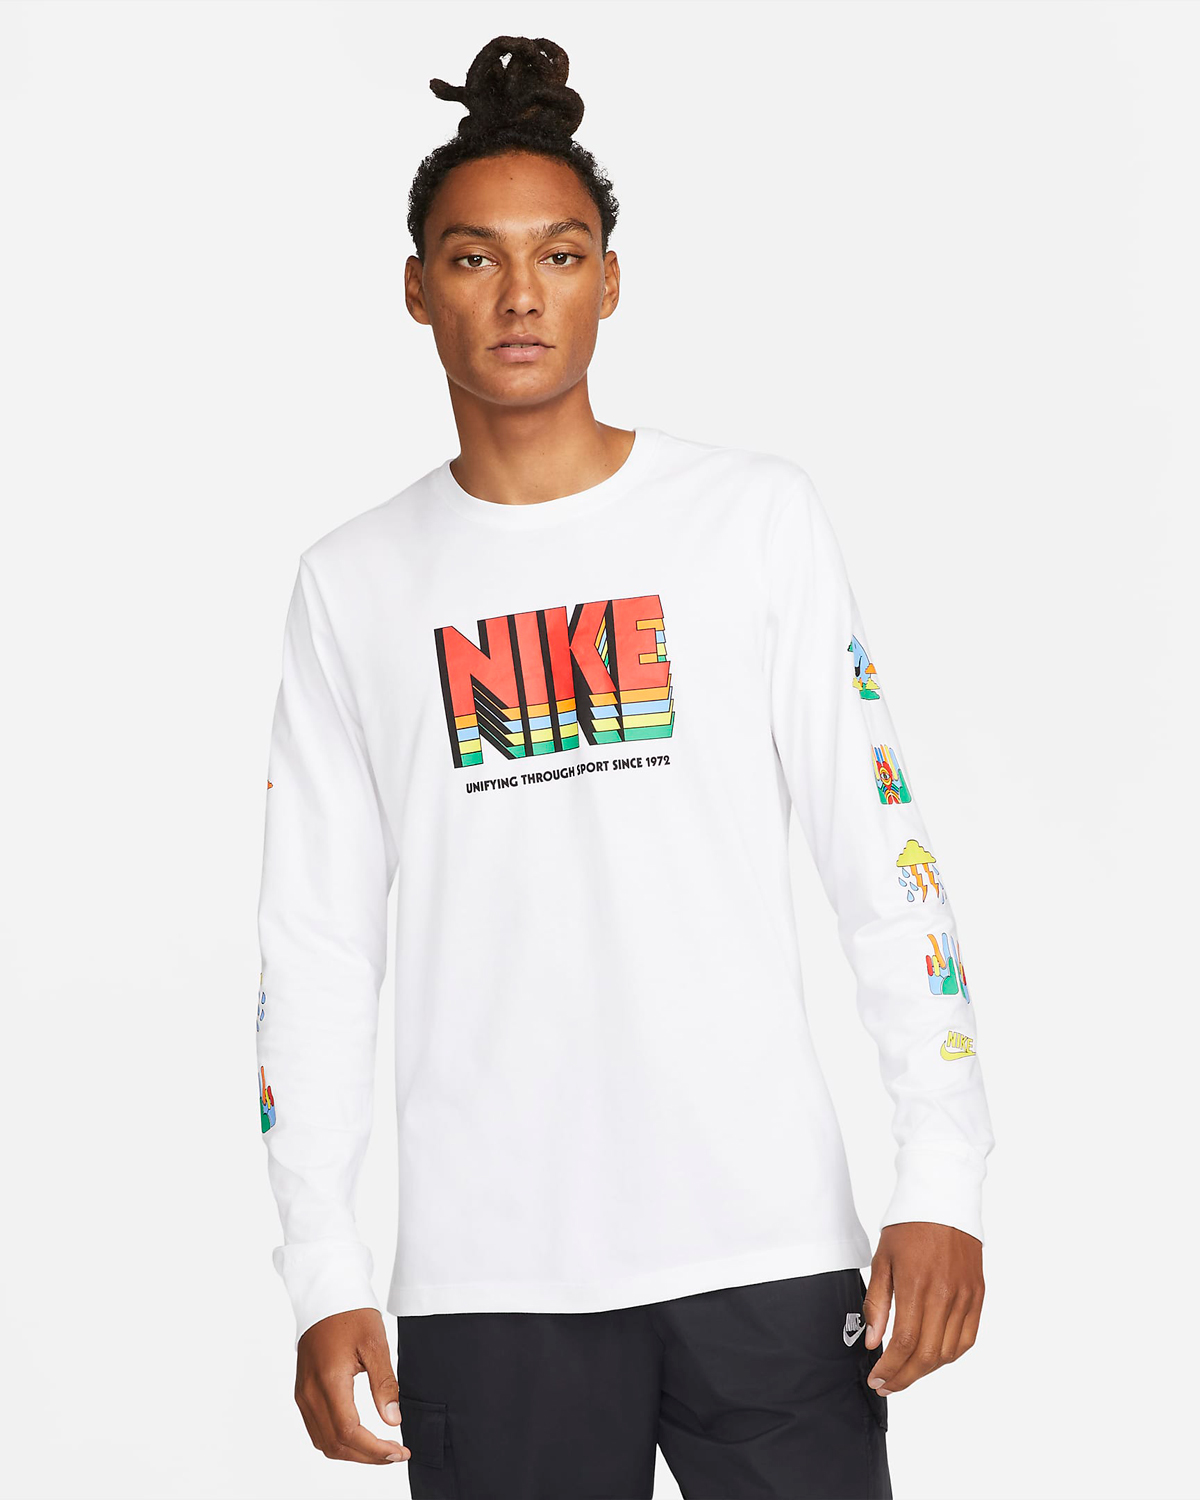 Nike-Sportswear-Long-Sleeve-T-Shirt-White-Multi-Color-1